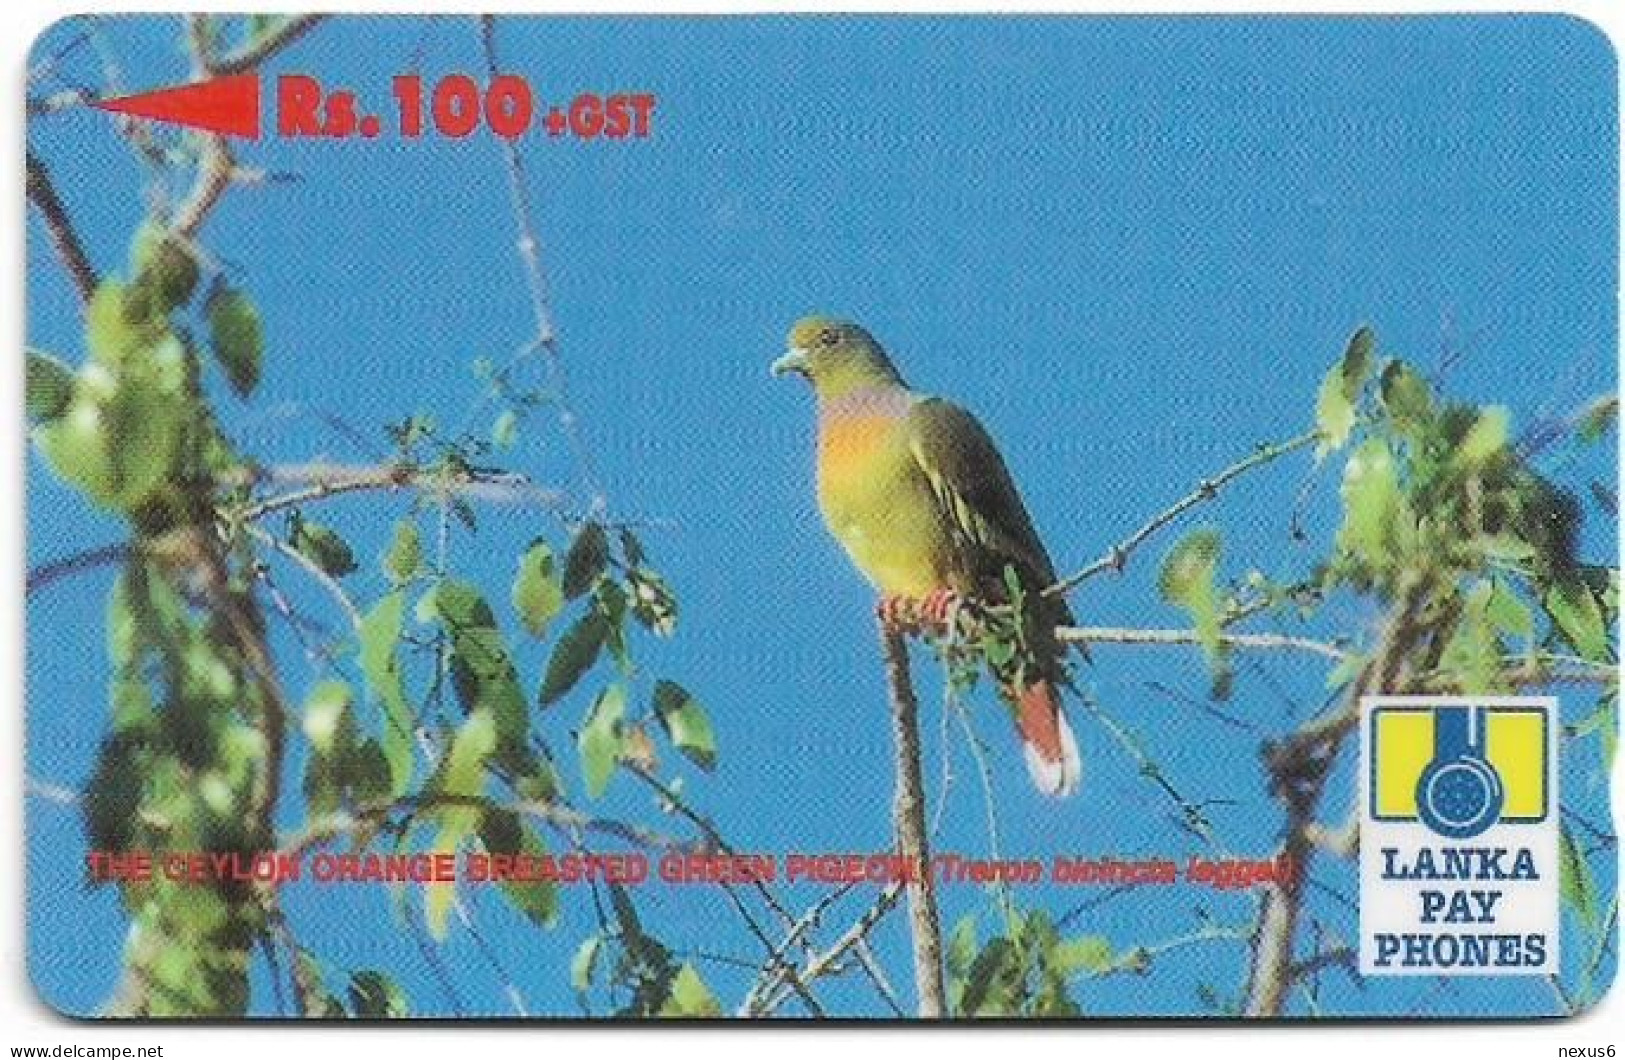 Sri Lanka - Lanka Pay Phones (GPT) - Orange Breasted Green Pigeon - 37SRLE (Normal 0, Letter B), 100Rs, Used - Sri Lanka (Ceylon)